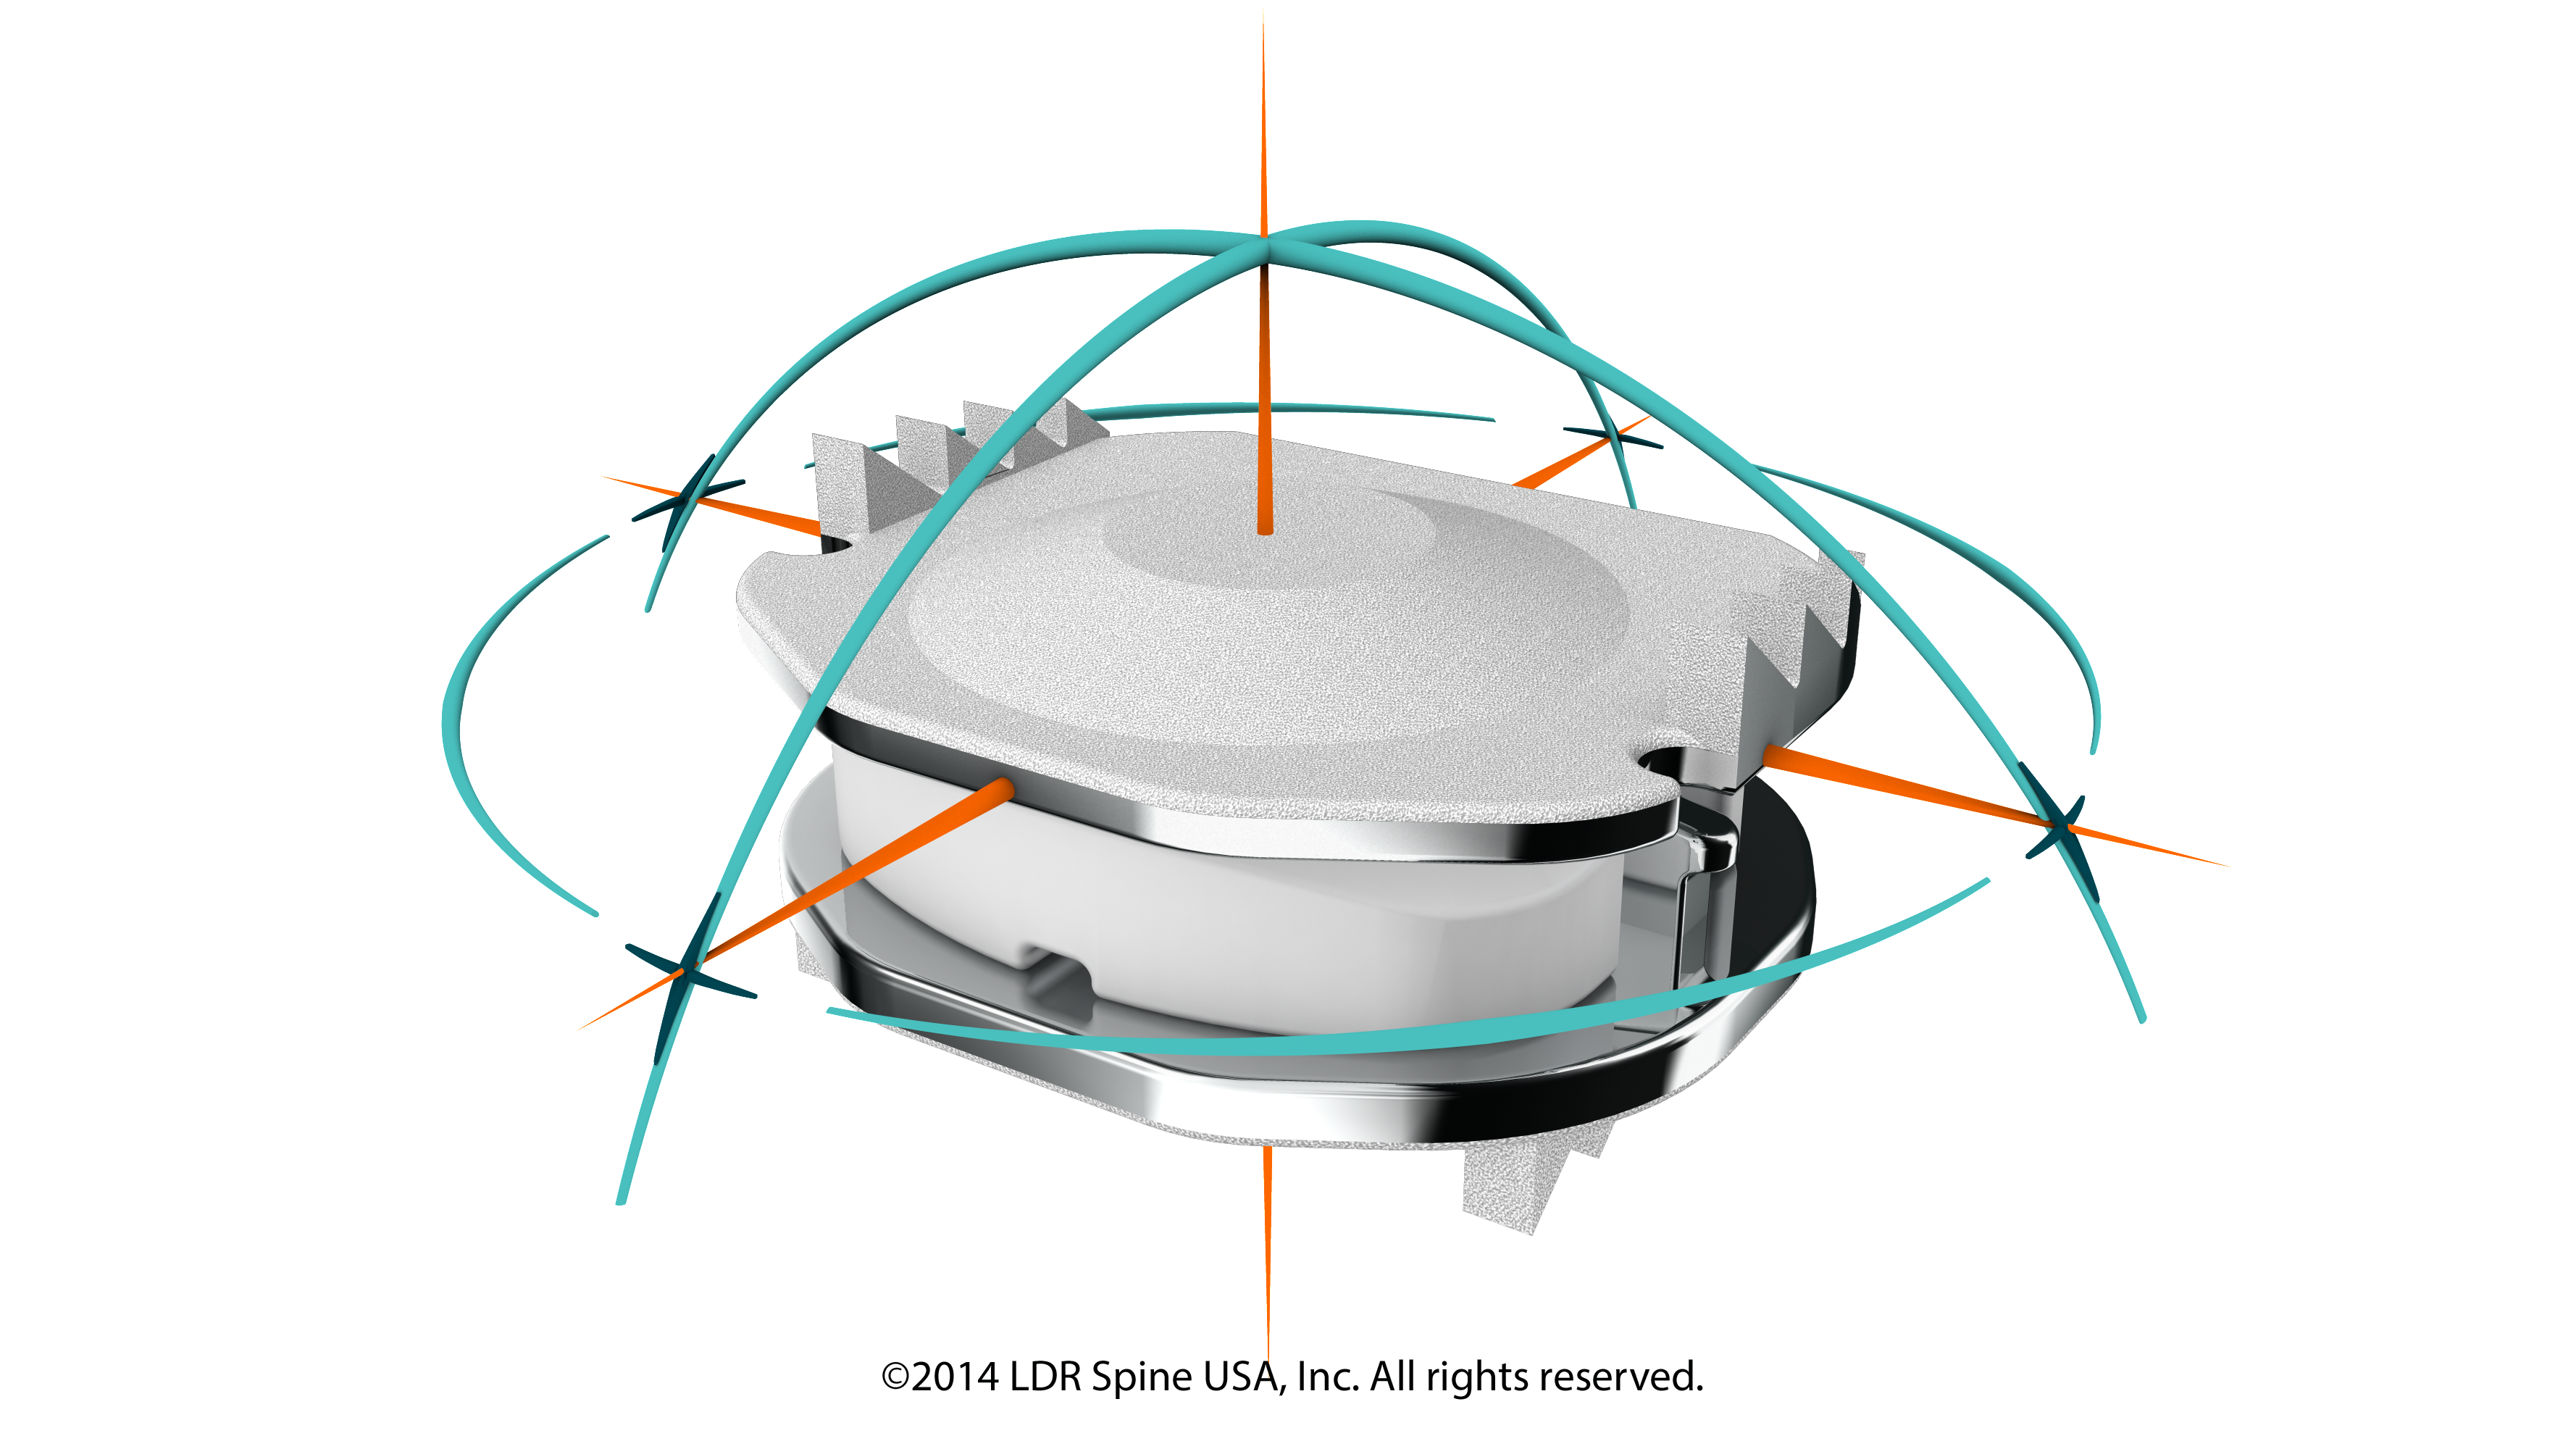 The Mobi-C Artificial Disc Preserves Mobility.